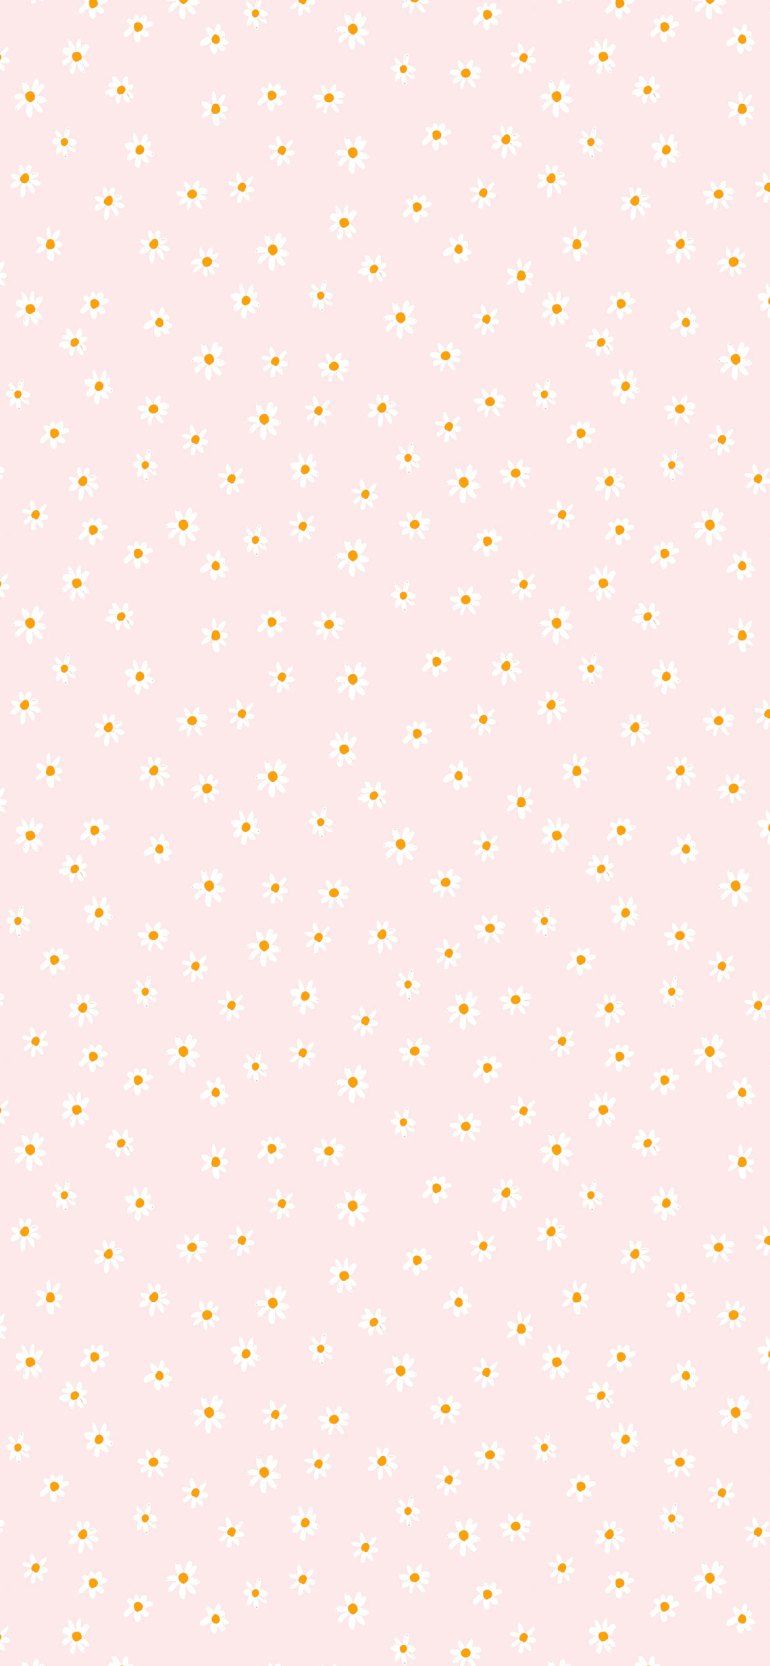 A pink and white polka dot pattern - Soft pink, hot pink, light pink